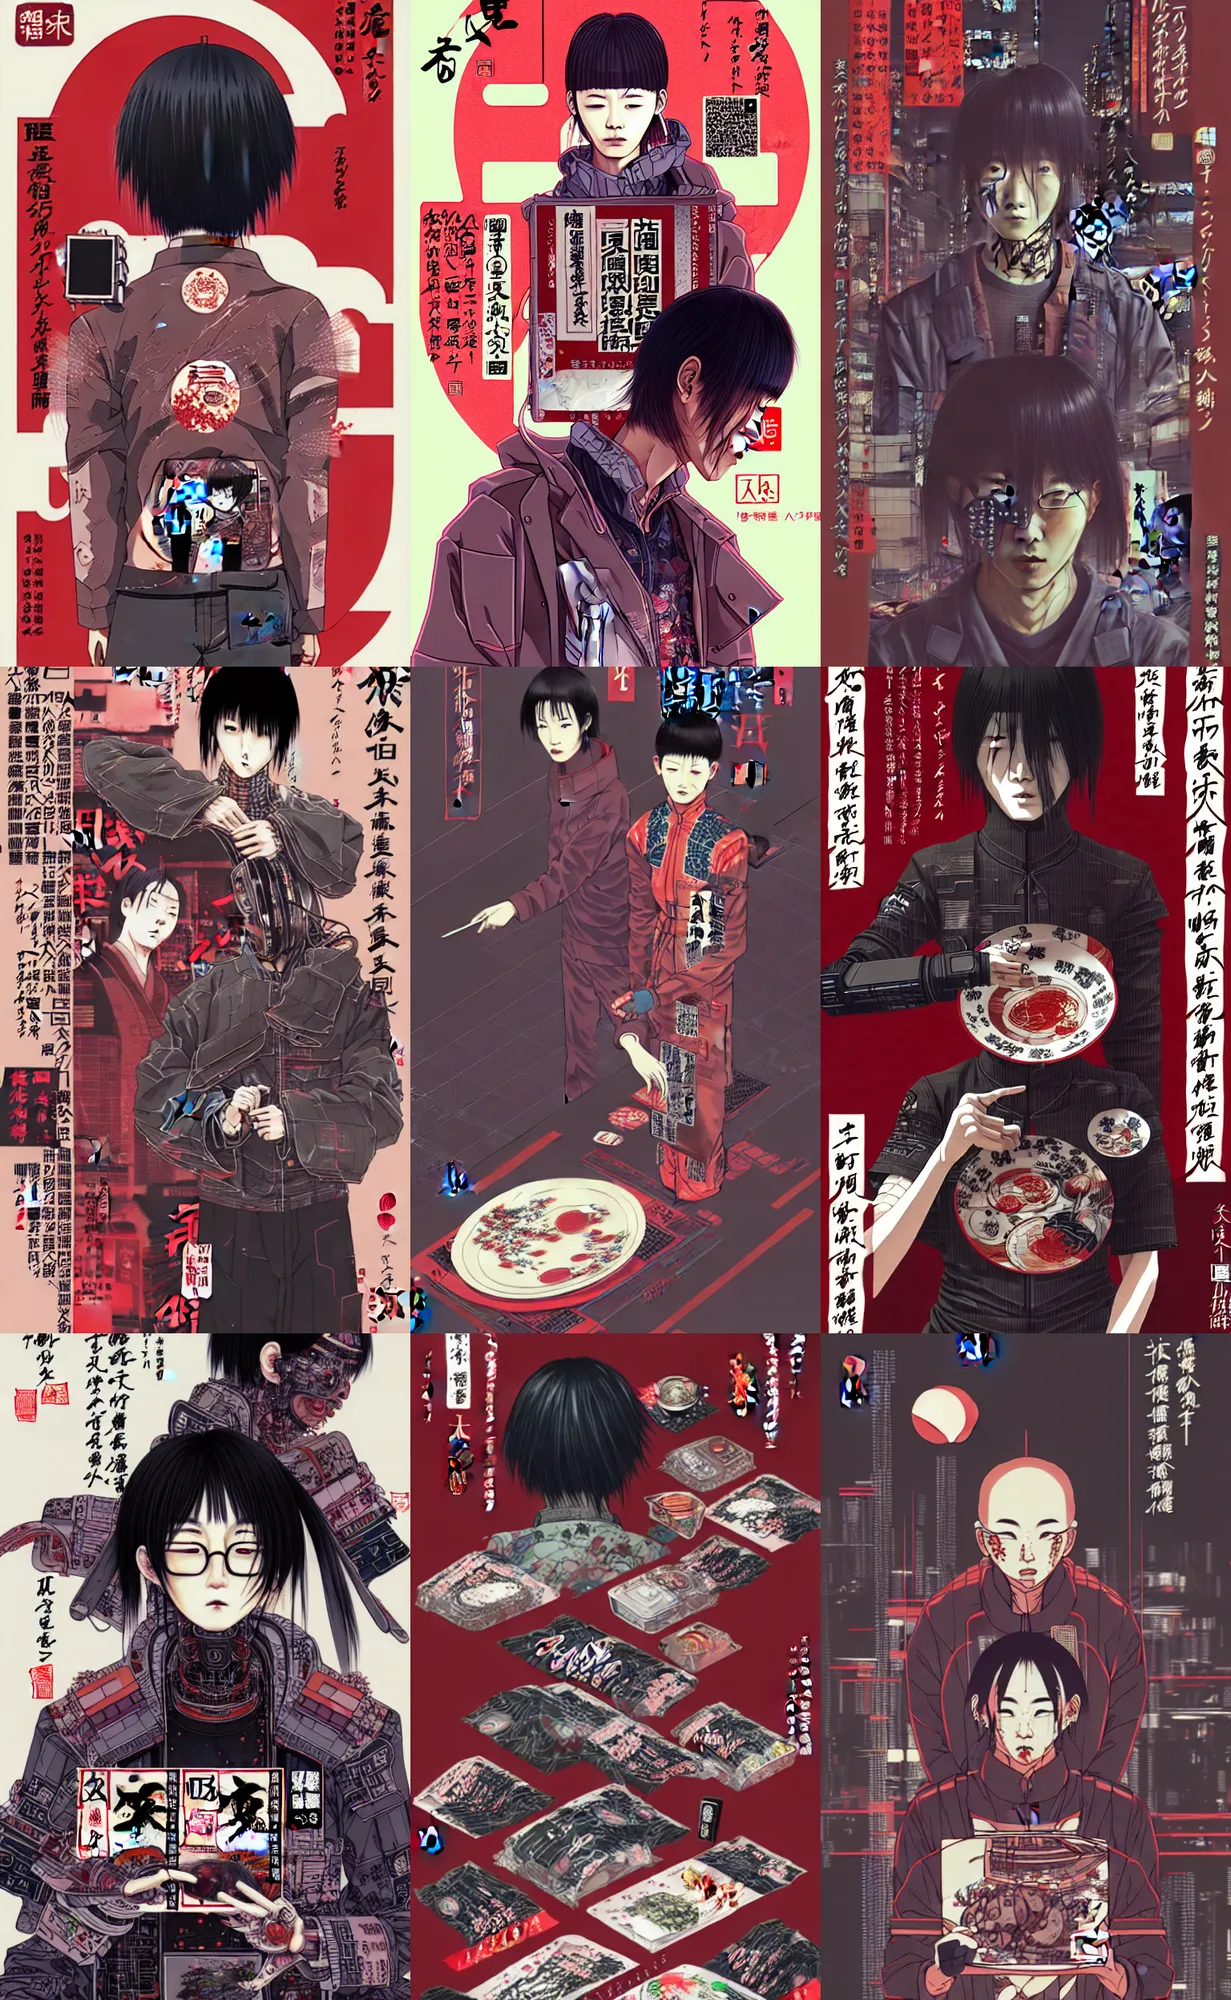 Prompt: package empty plate japanese cyberpunk chinese illustration concept art trending on arstation 4 k, graphic design, by kim jung ji, katsuhiro otomo and junji ito